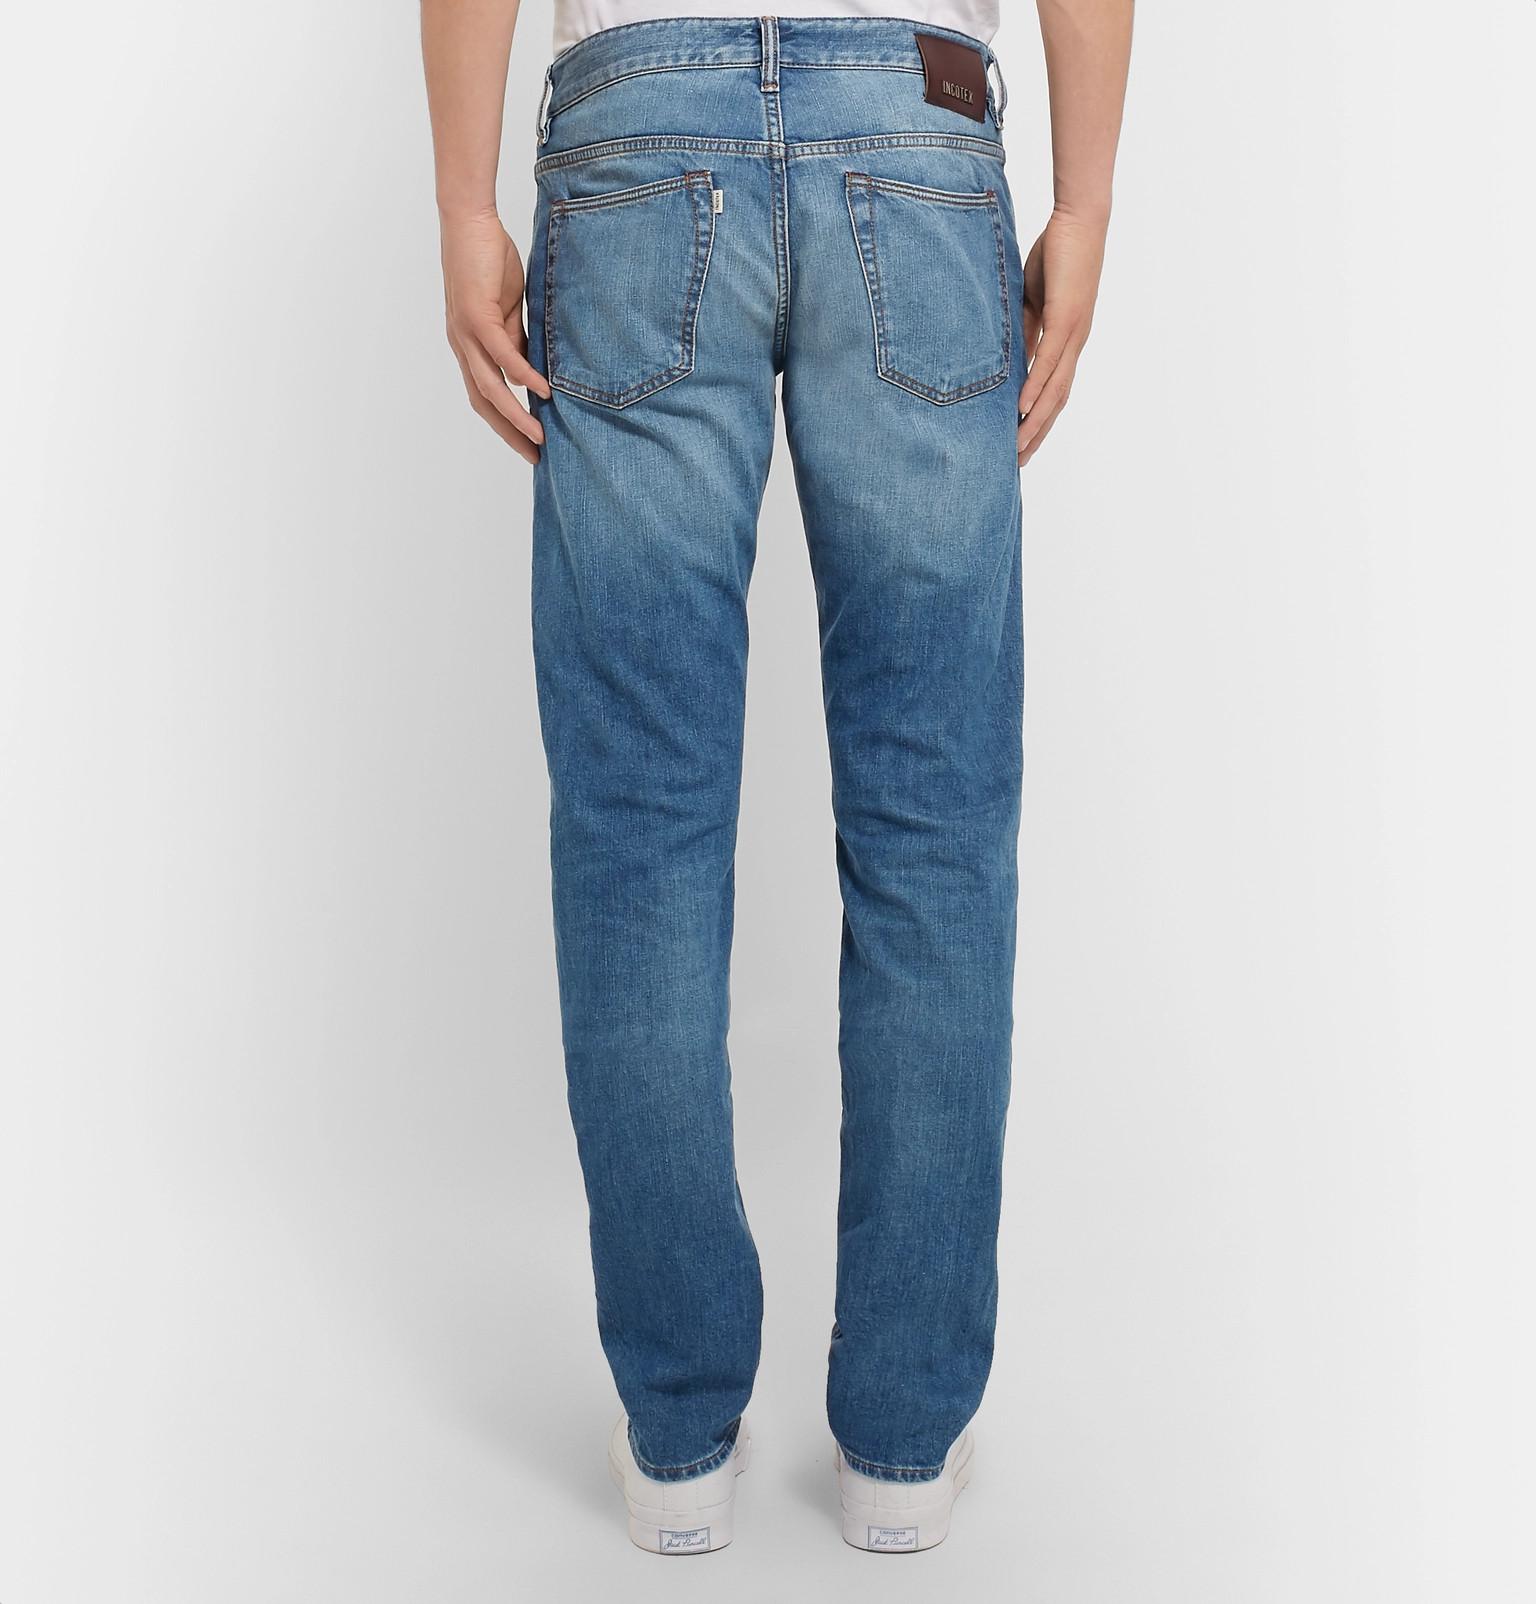 Incotex Slim-fit Stretch-denim Jeans in Blue for Men - Lyst